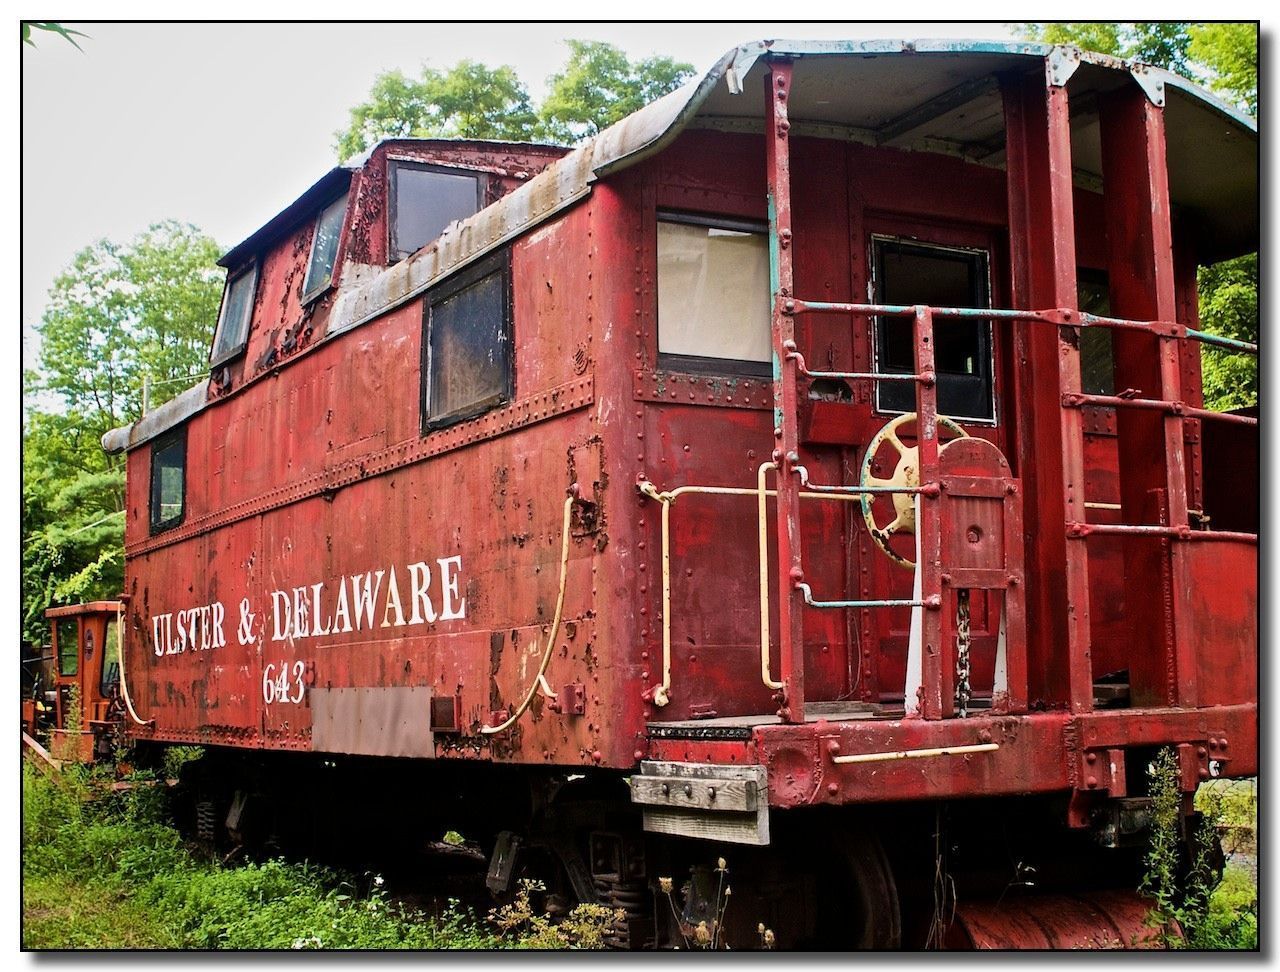 The Catskill Mountain Railroad